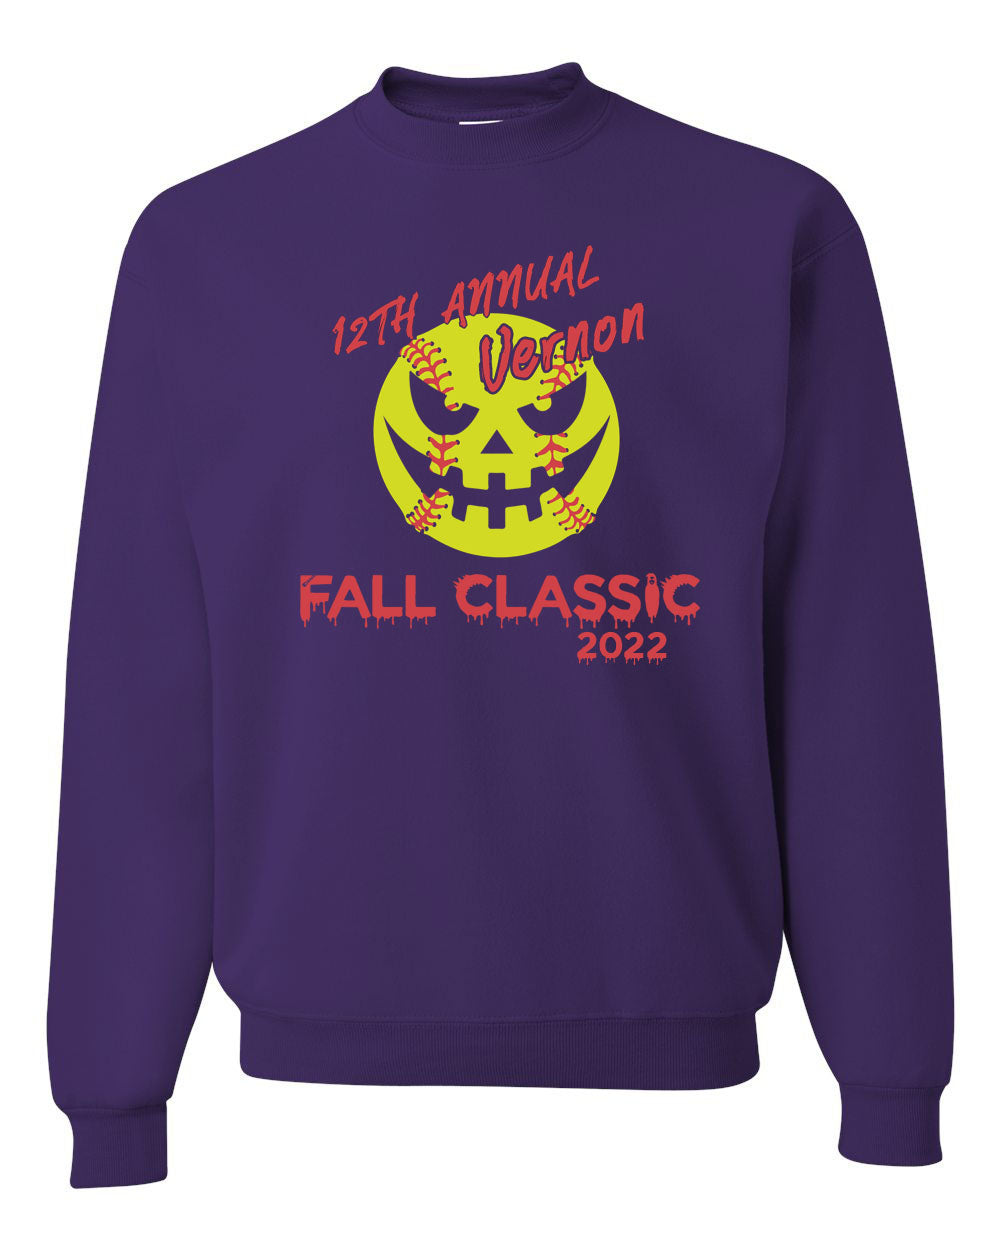 Fall classic non hooded sweatshirt